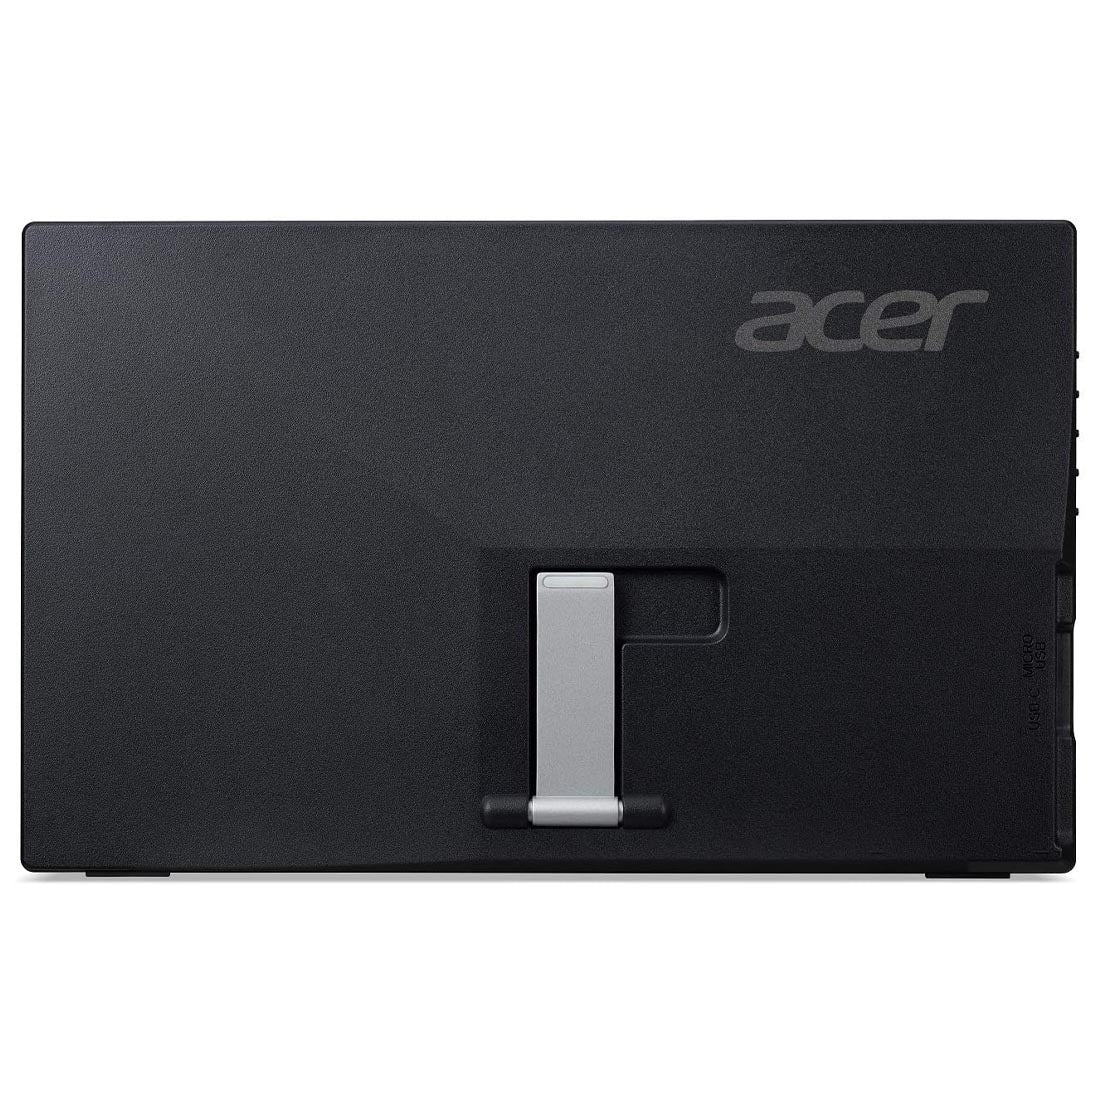 Acer PM161Q bu 15.6-इंच FHD IPS LED पोर्टेबल मॉनिटर USB-C पोर्ट के साथ